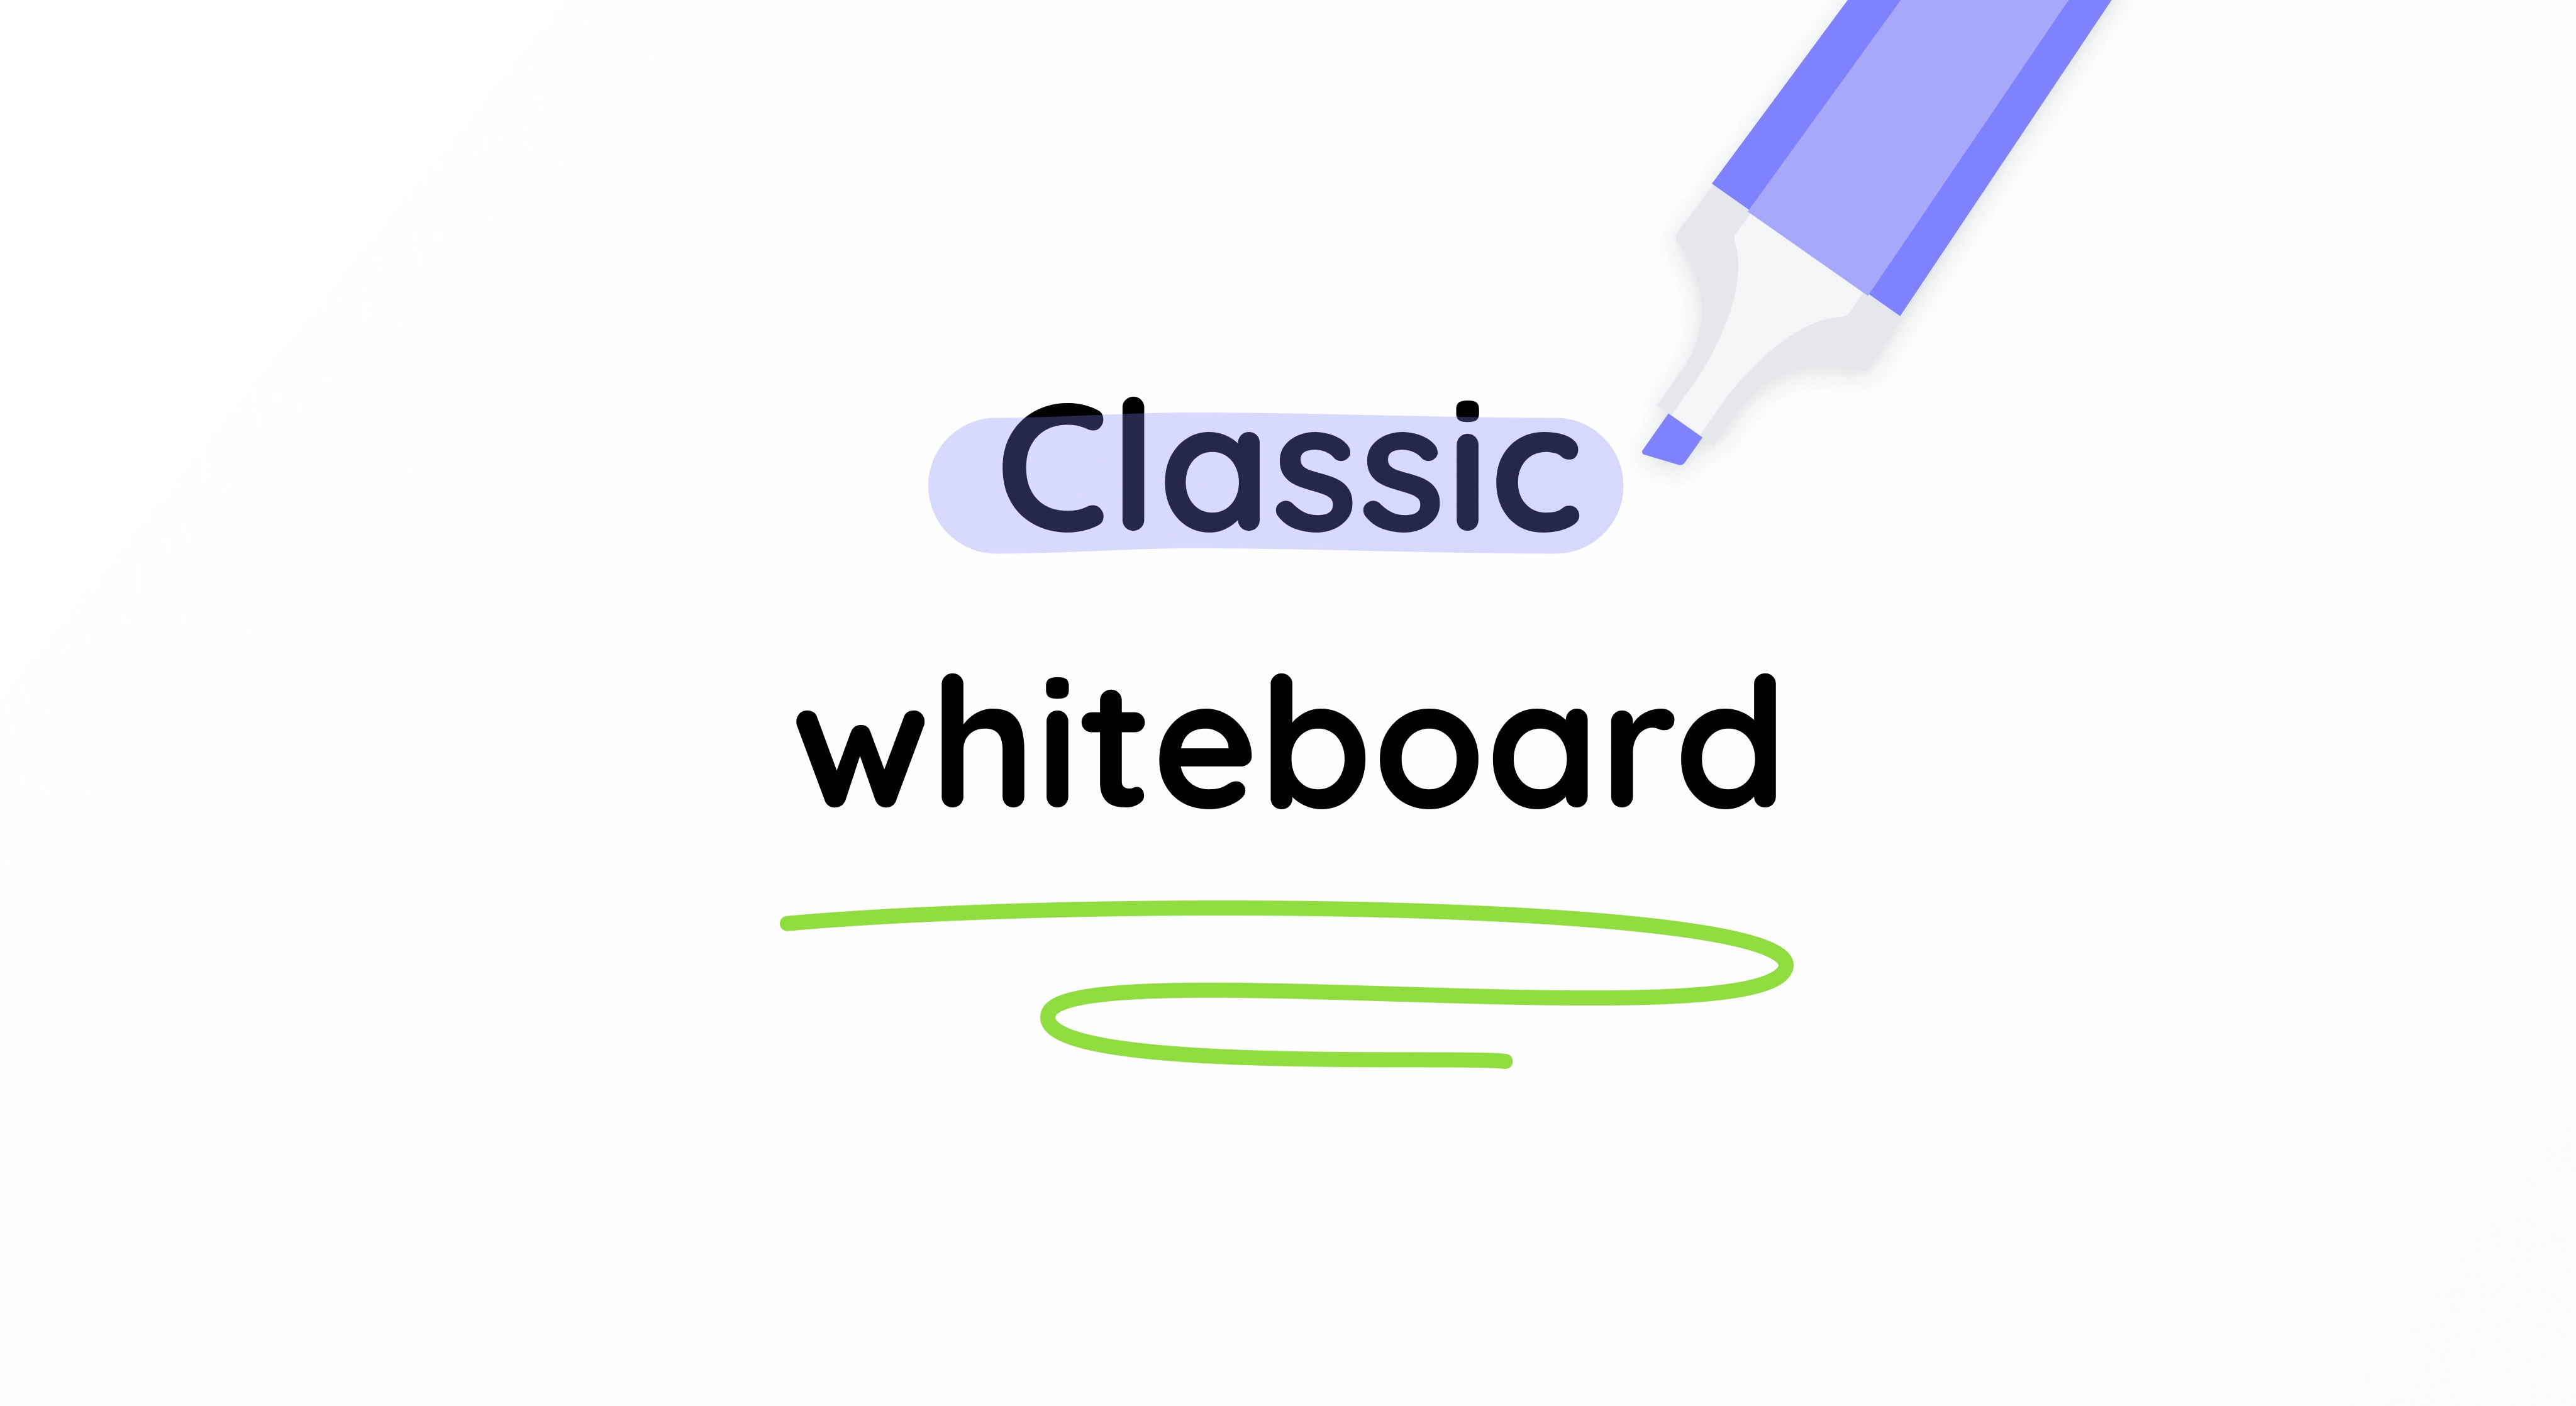 Classic whiteboard